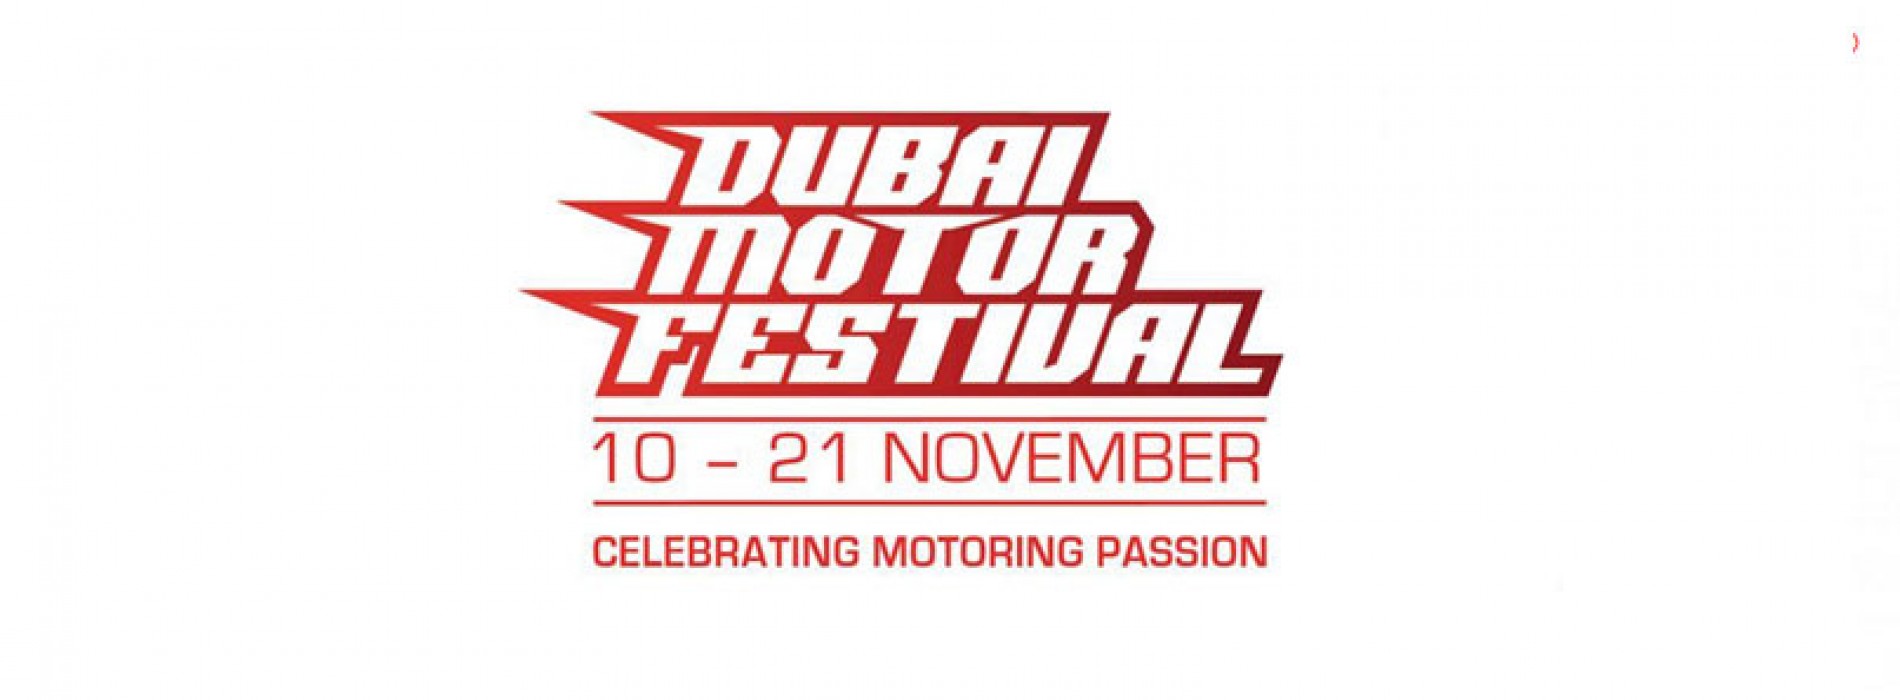 Dubai Motor Festival 2015 gears up to offer ‘FEEL THE RUSH’ motoring experiences